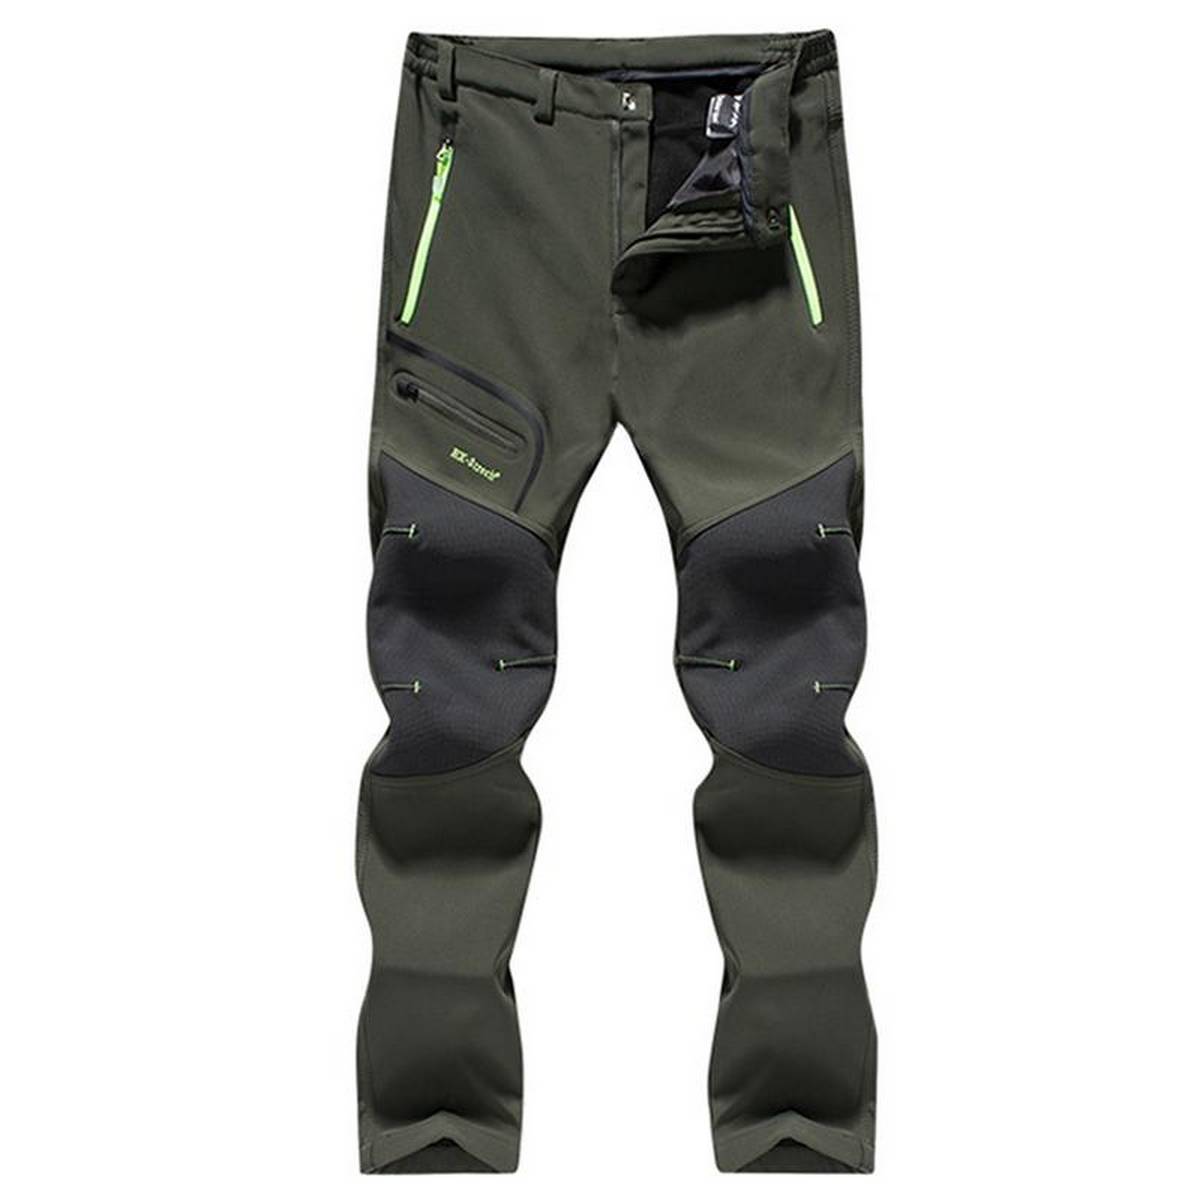 Men's Pants Outdoor Waterproof Hiking Trousers Camping Climbing Fishing  Skiing Trekking Softshell Pants Plus Size S-5XL